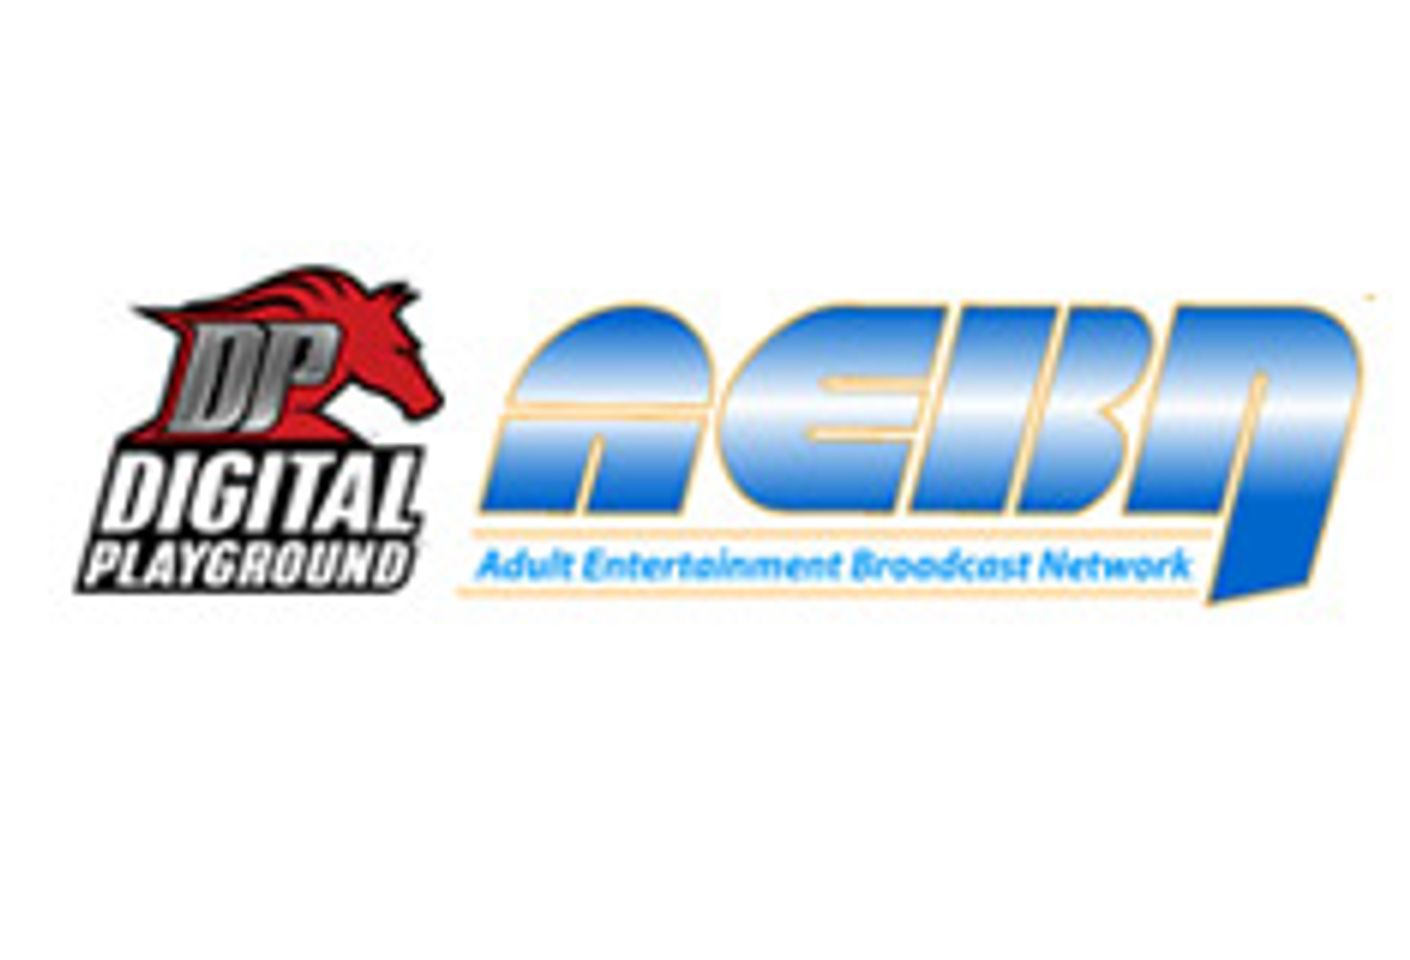 AEBN Signs Digital Playground